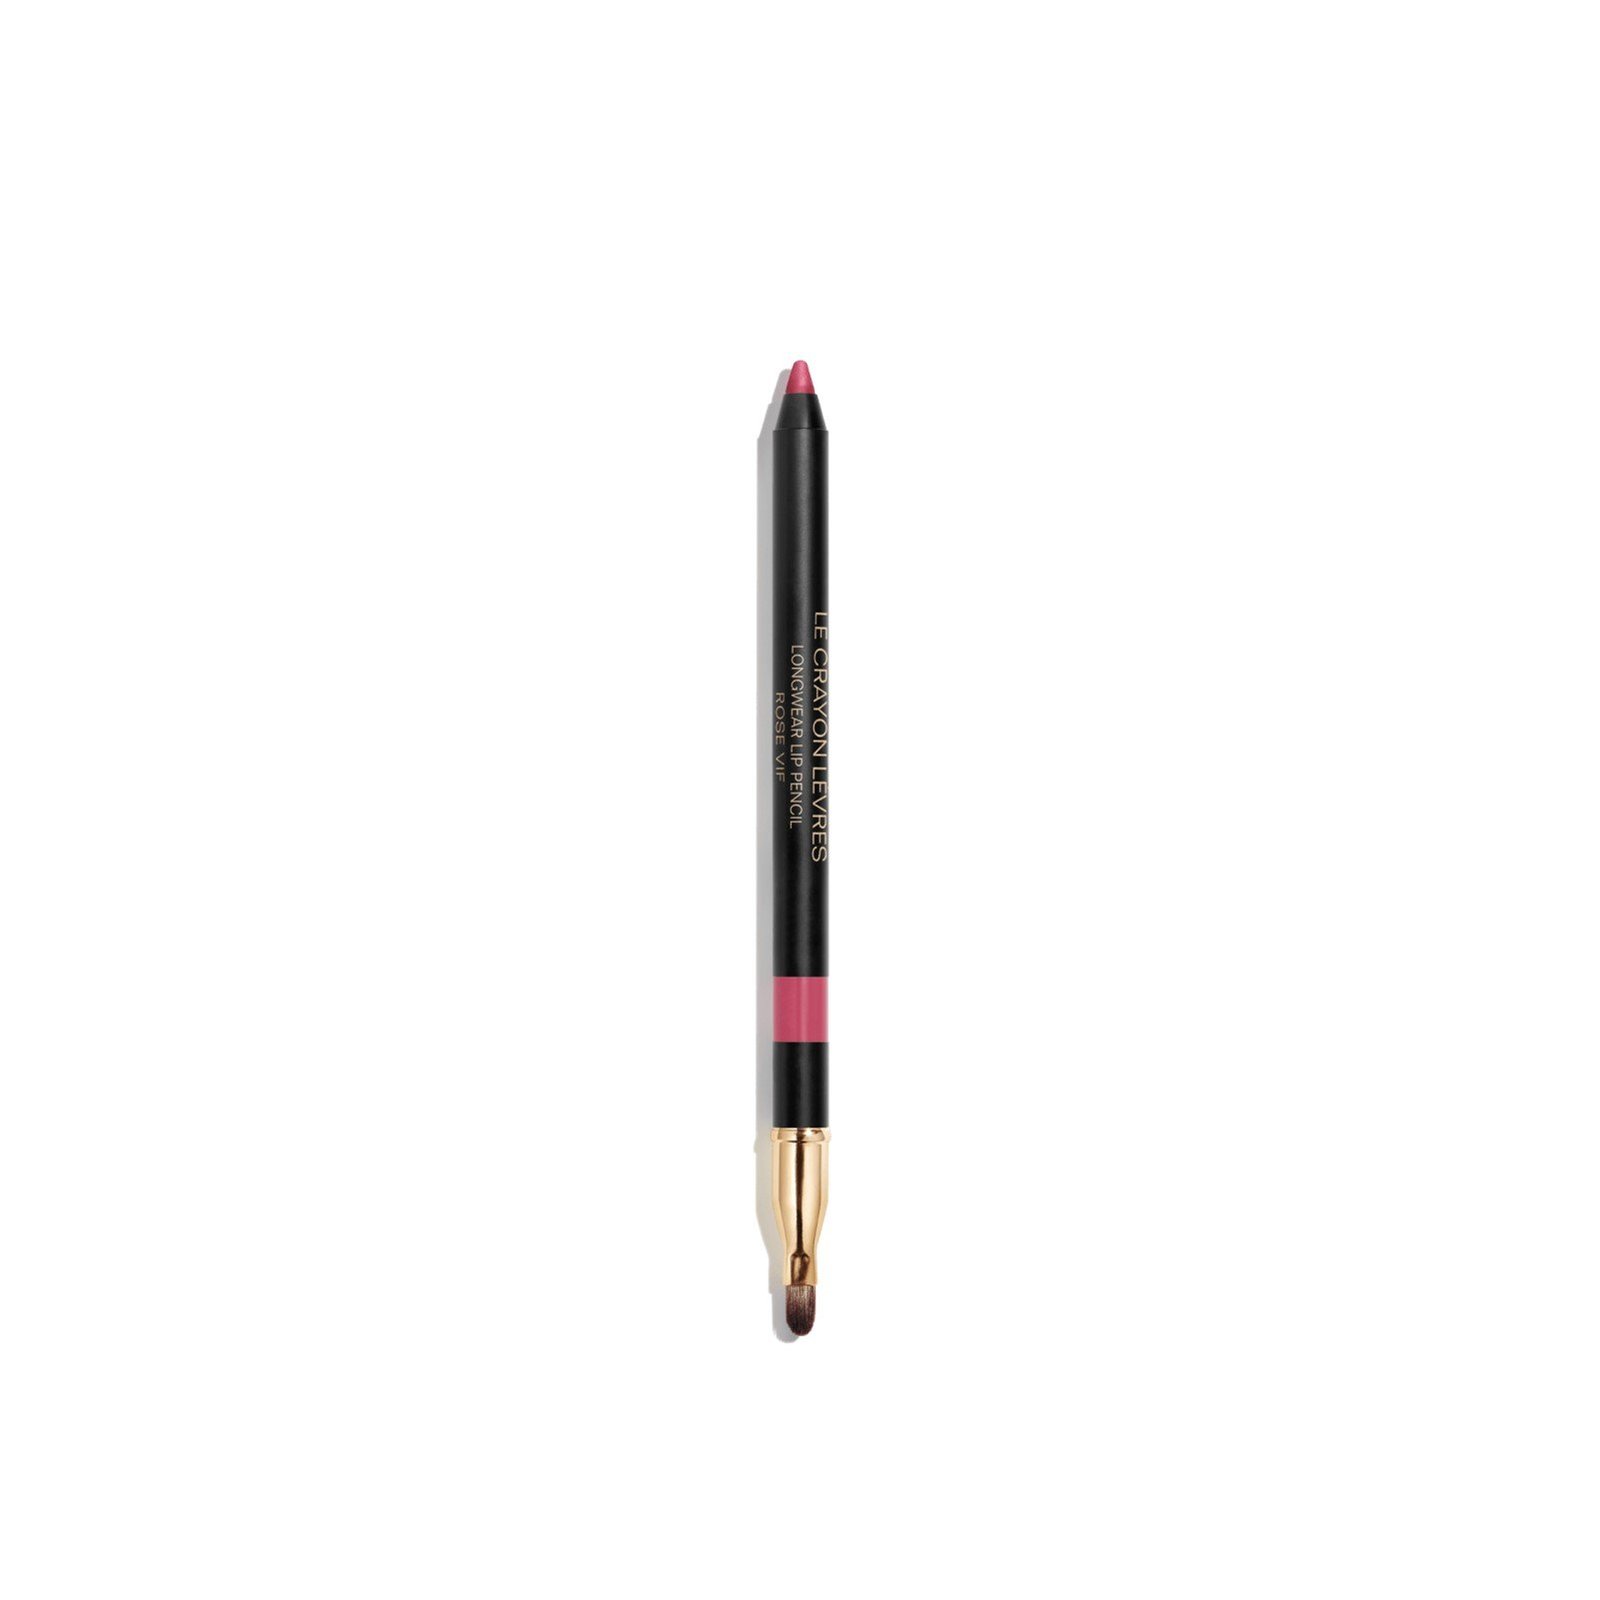 CHANEL Le Crayon Lèvres Longwear Lip Pencil 166 Rose Vif 1.2g